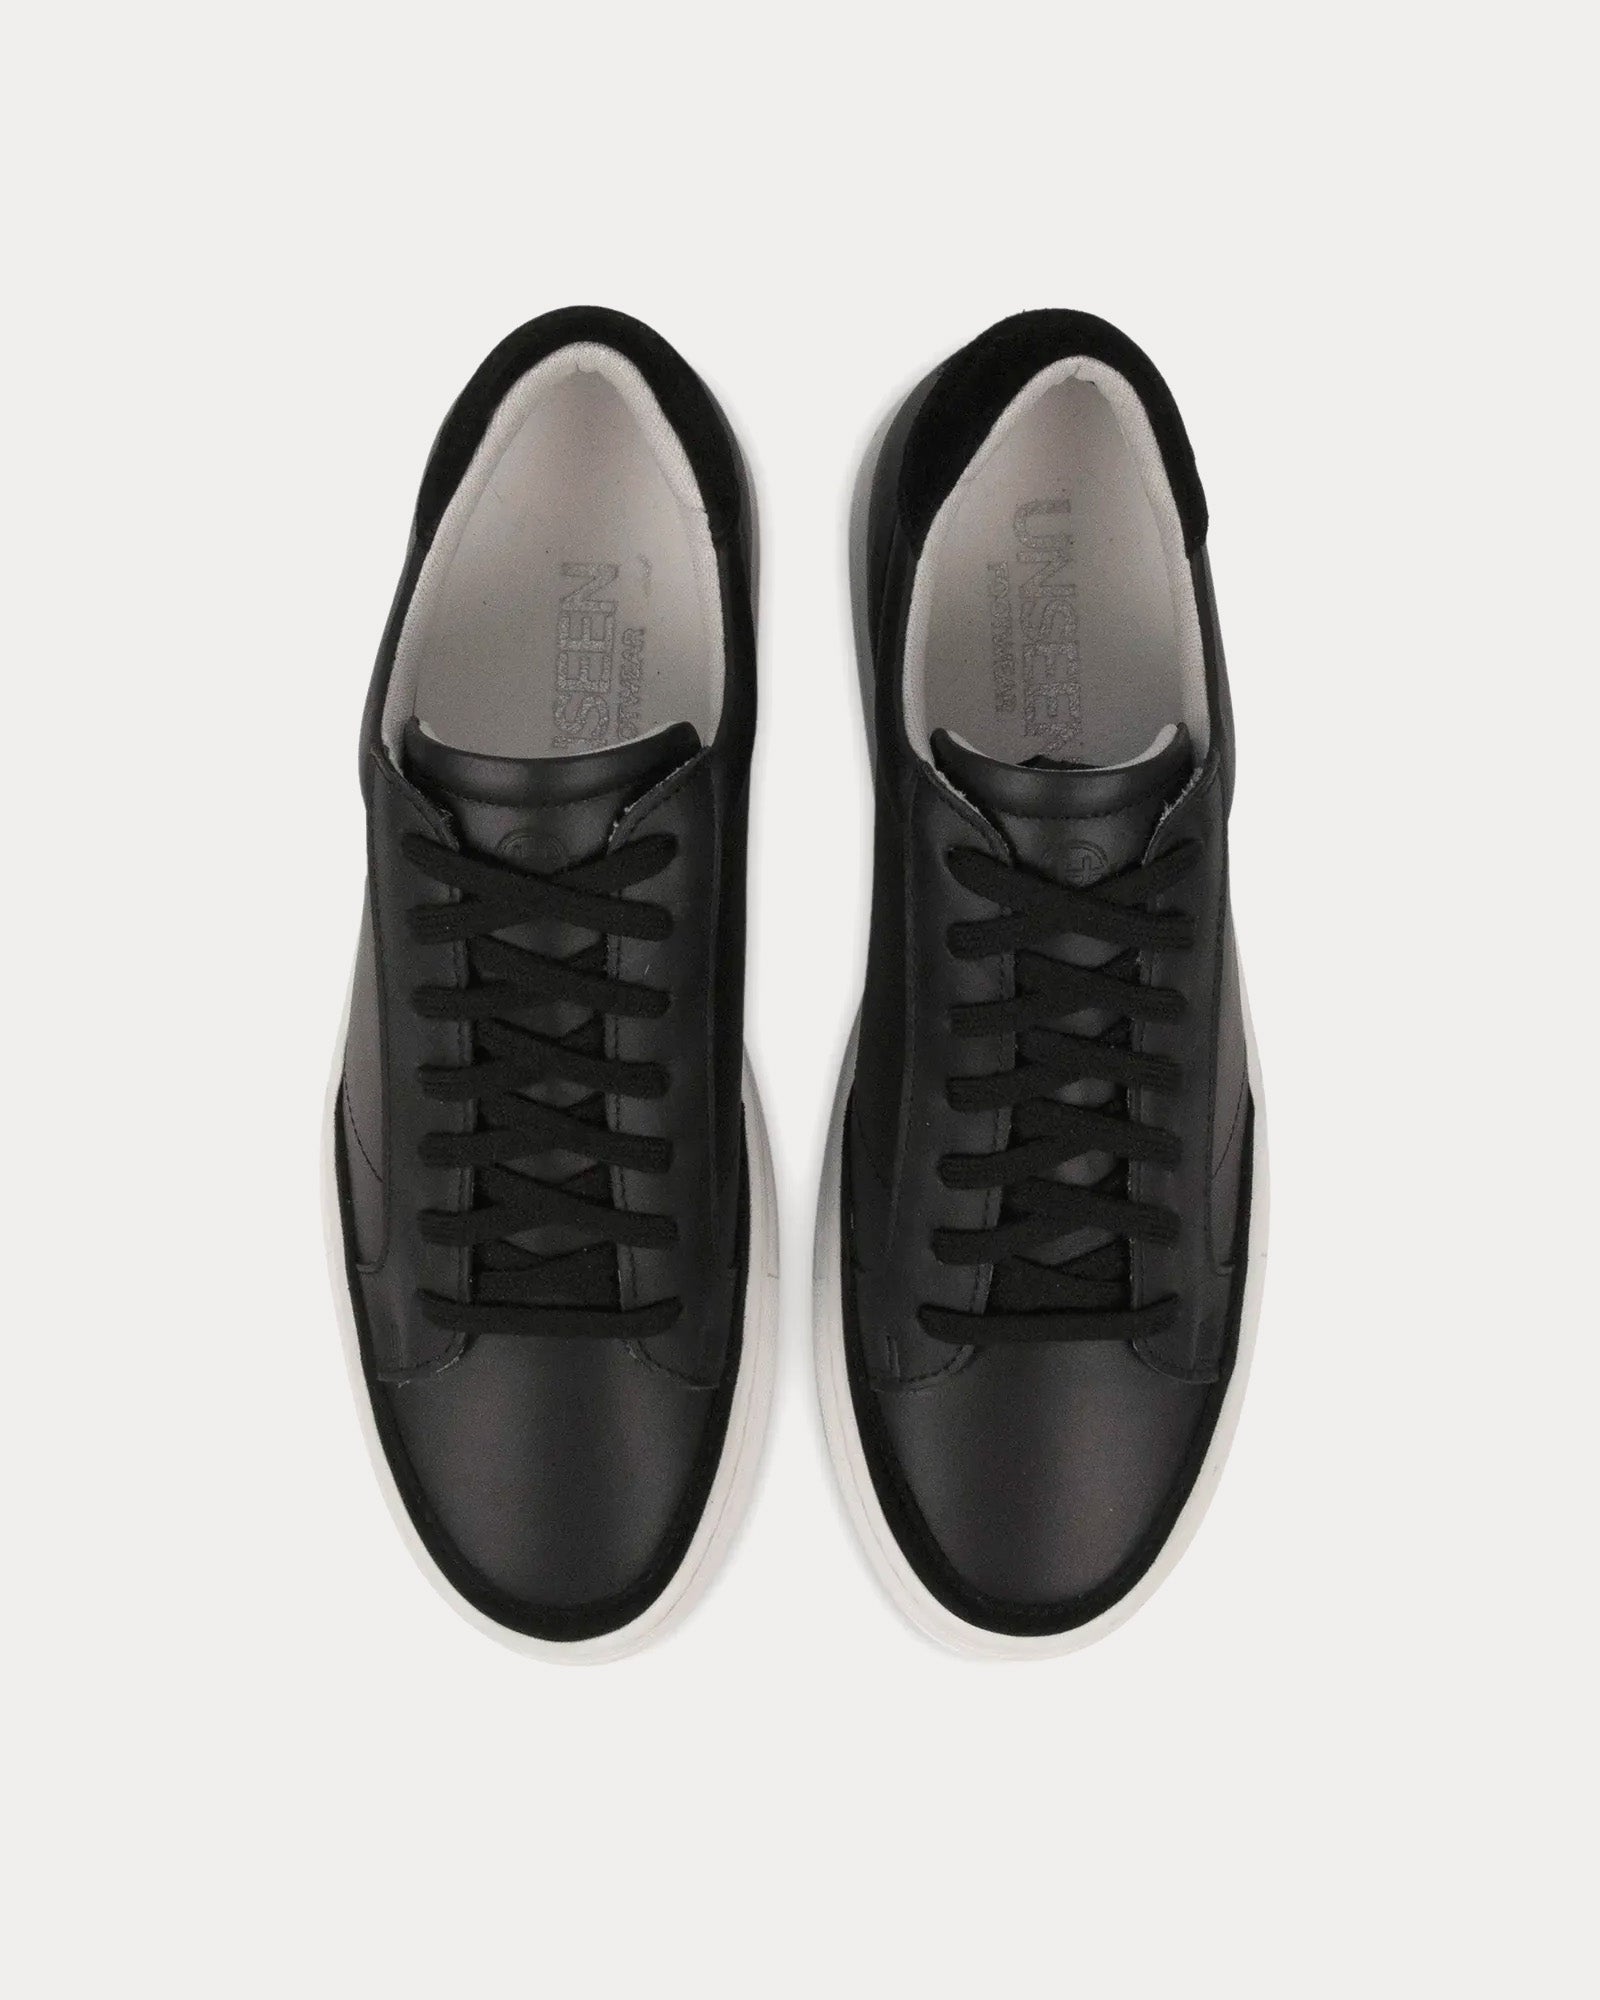 Unseen Footwear - Helier Leather & Suede Black / White Low Top Sneakers